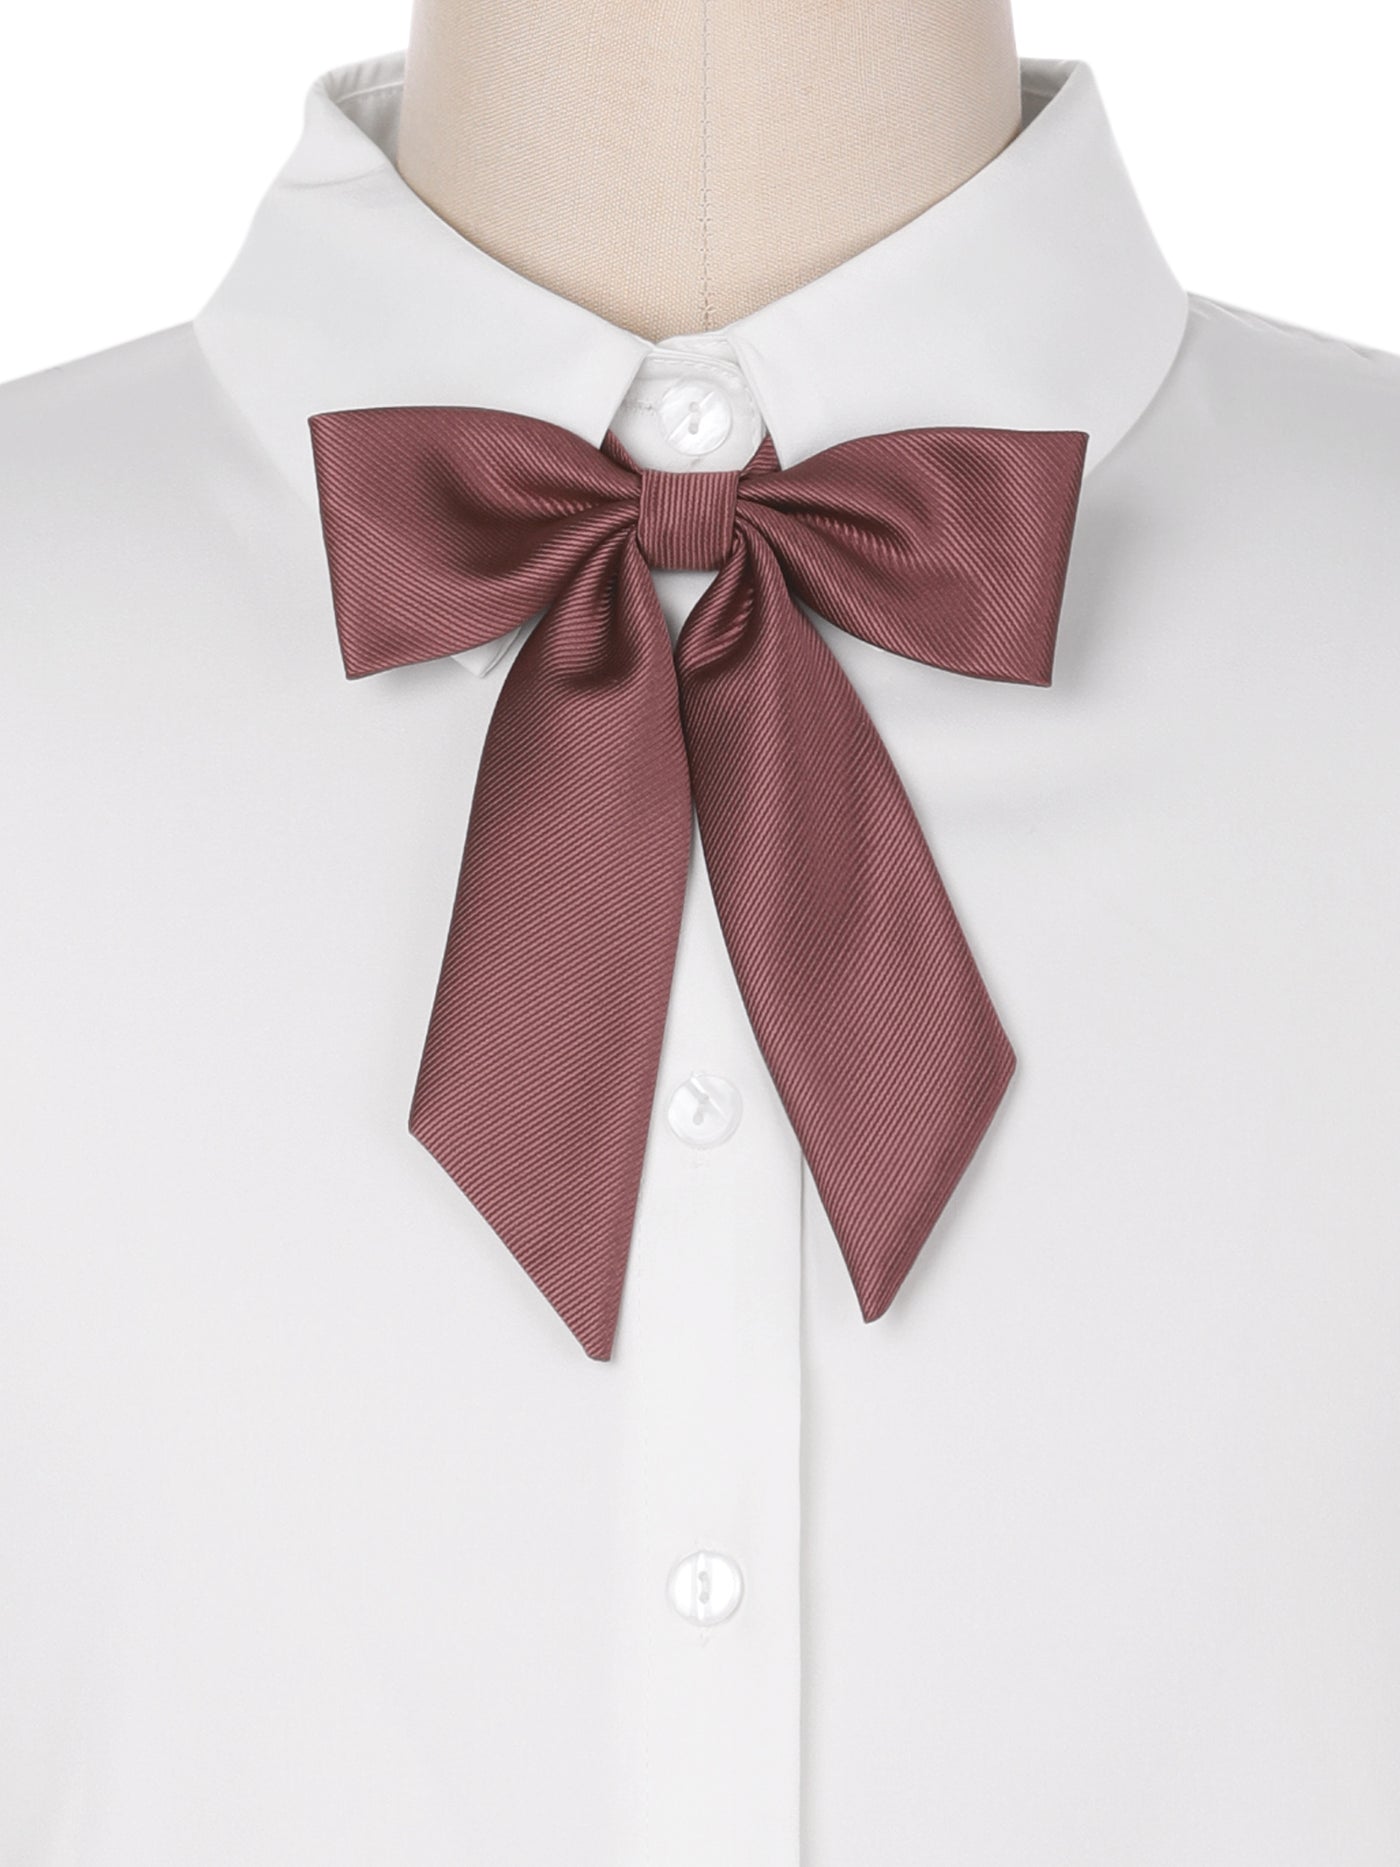 Bublédon Women's Bow Ties Solid Color Western Ribbon Pre-Tied Bowties for School Uniform